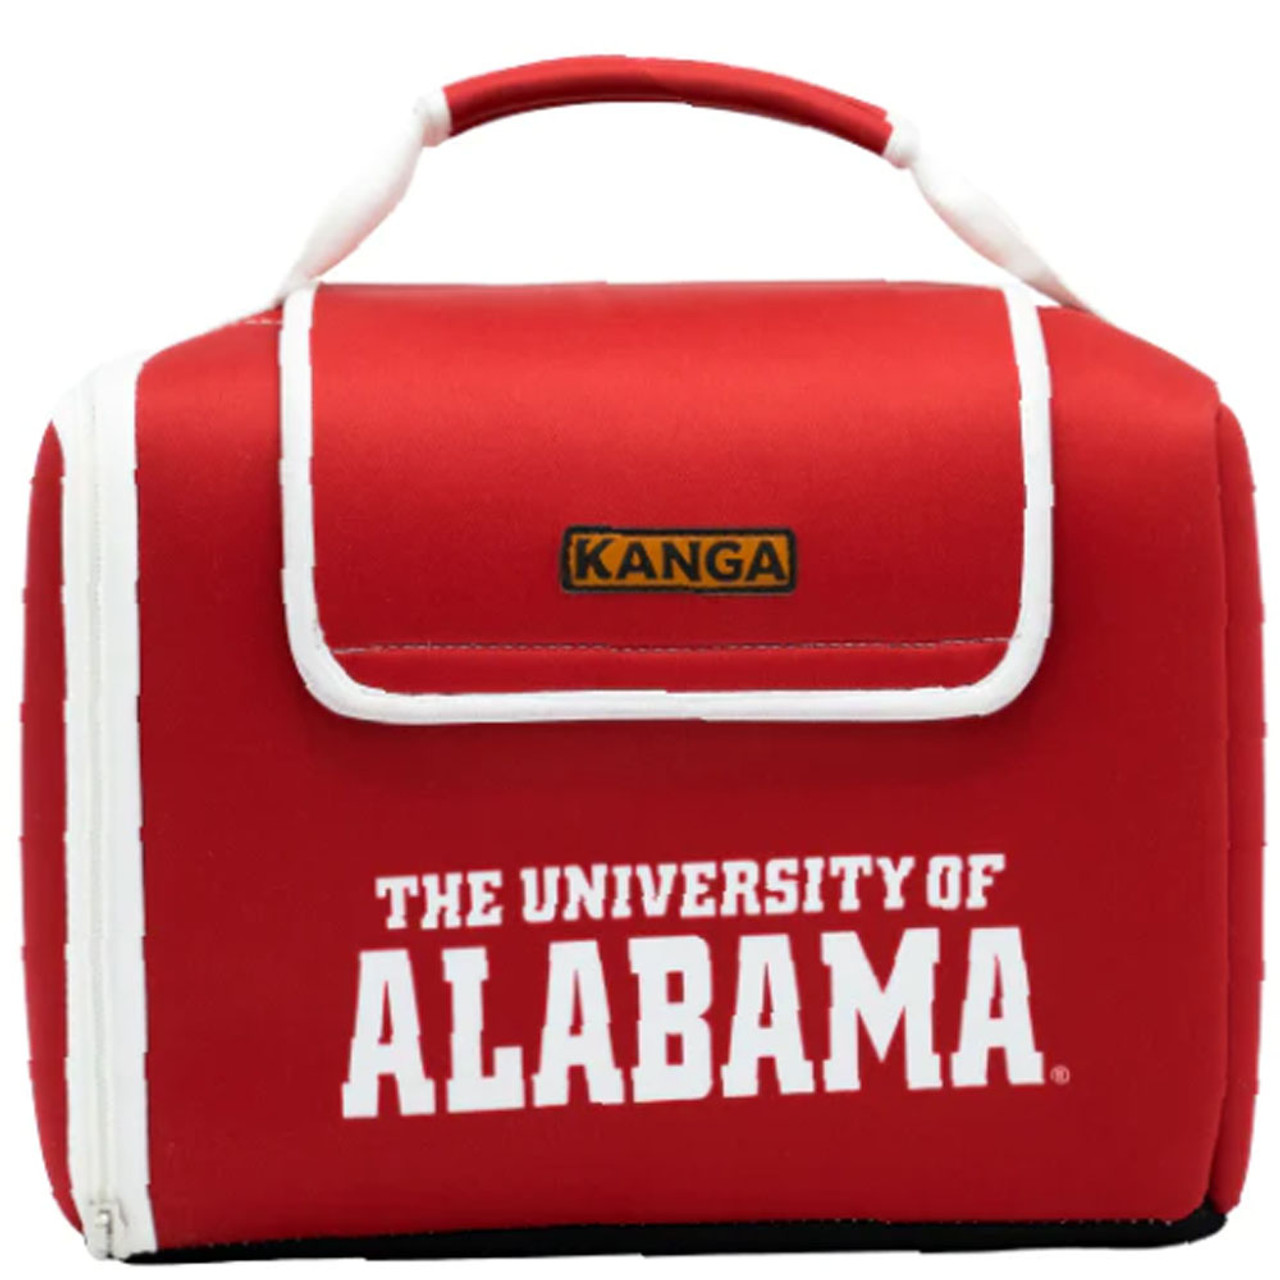 Kanga Coolers 12 Pack Kase Mate - Auburn University - 7 SOUTH